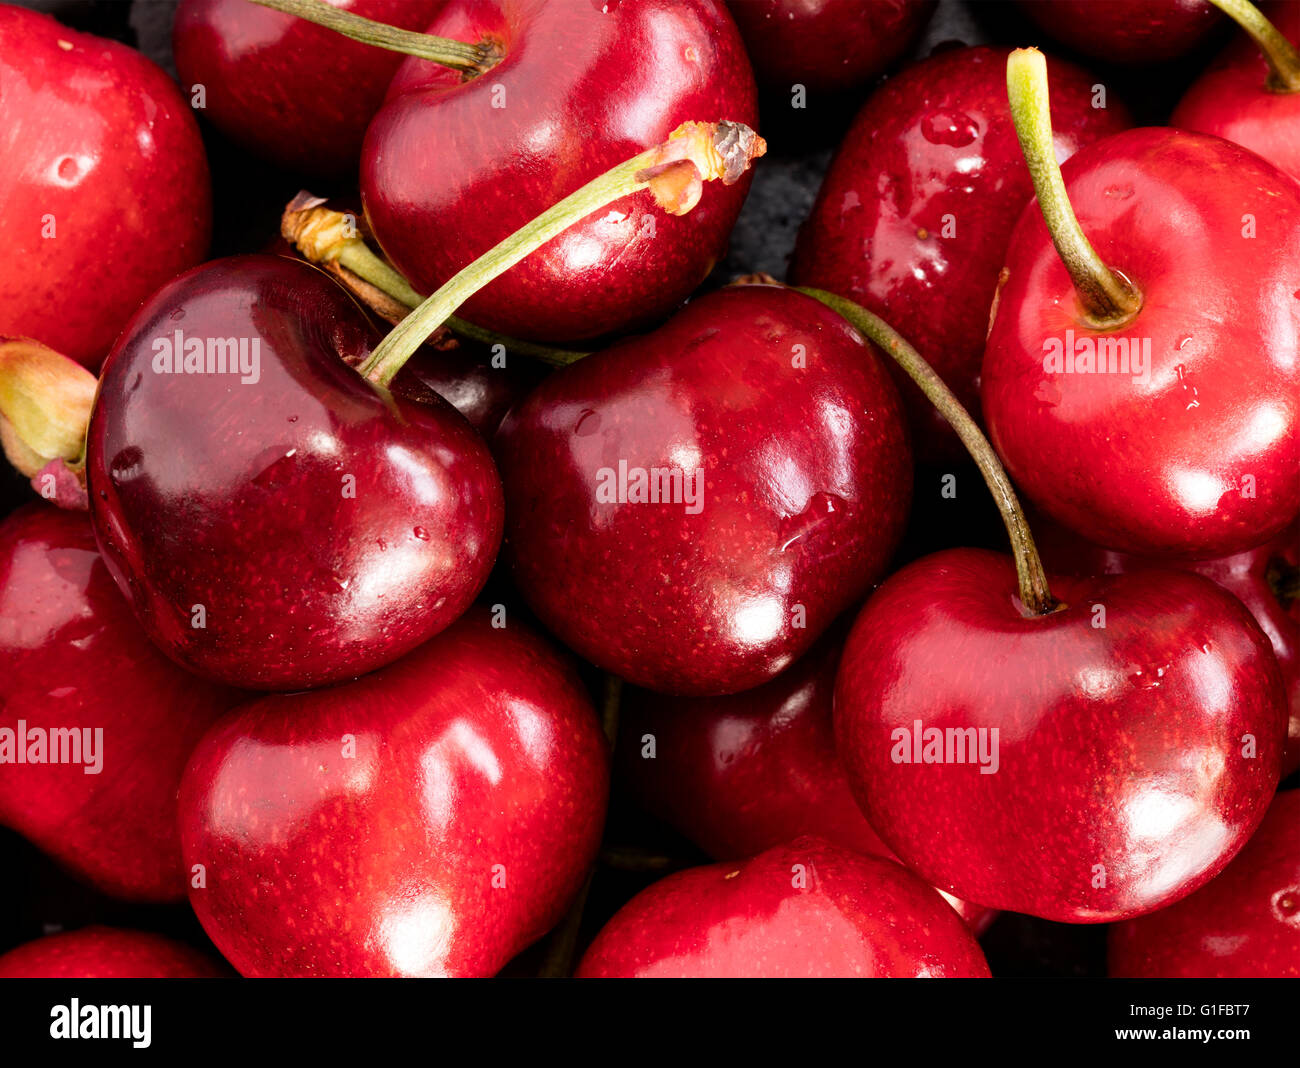 fresh cherries on a black stone, big size photo, high resolution Stock Photo